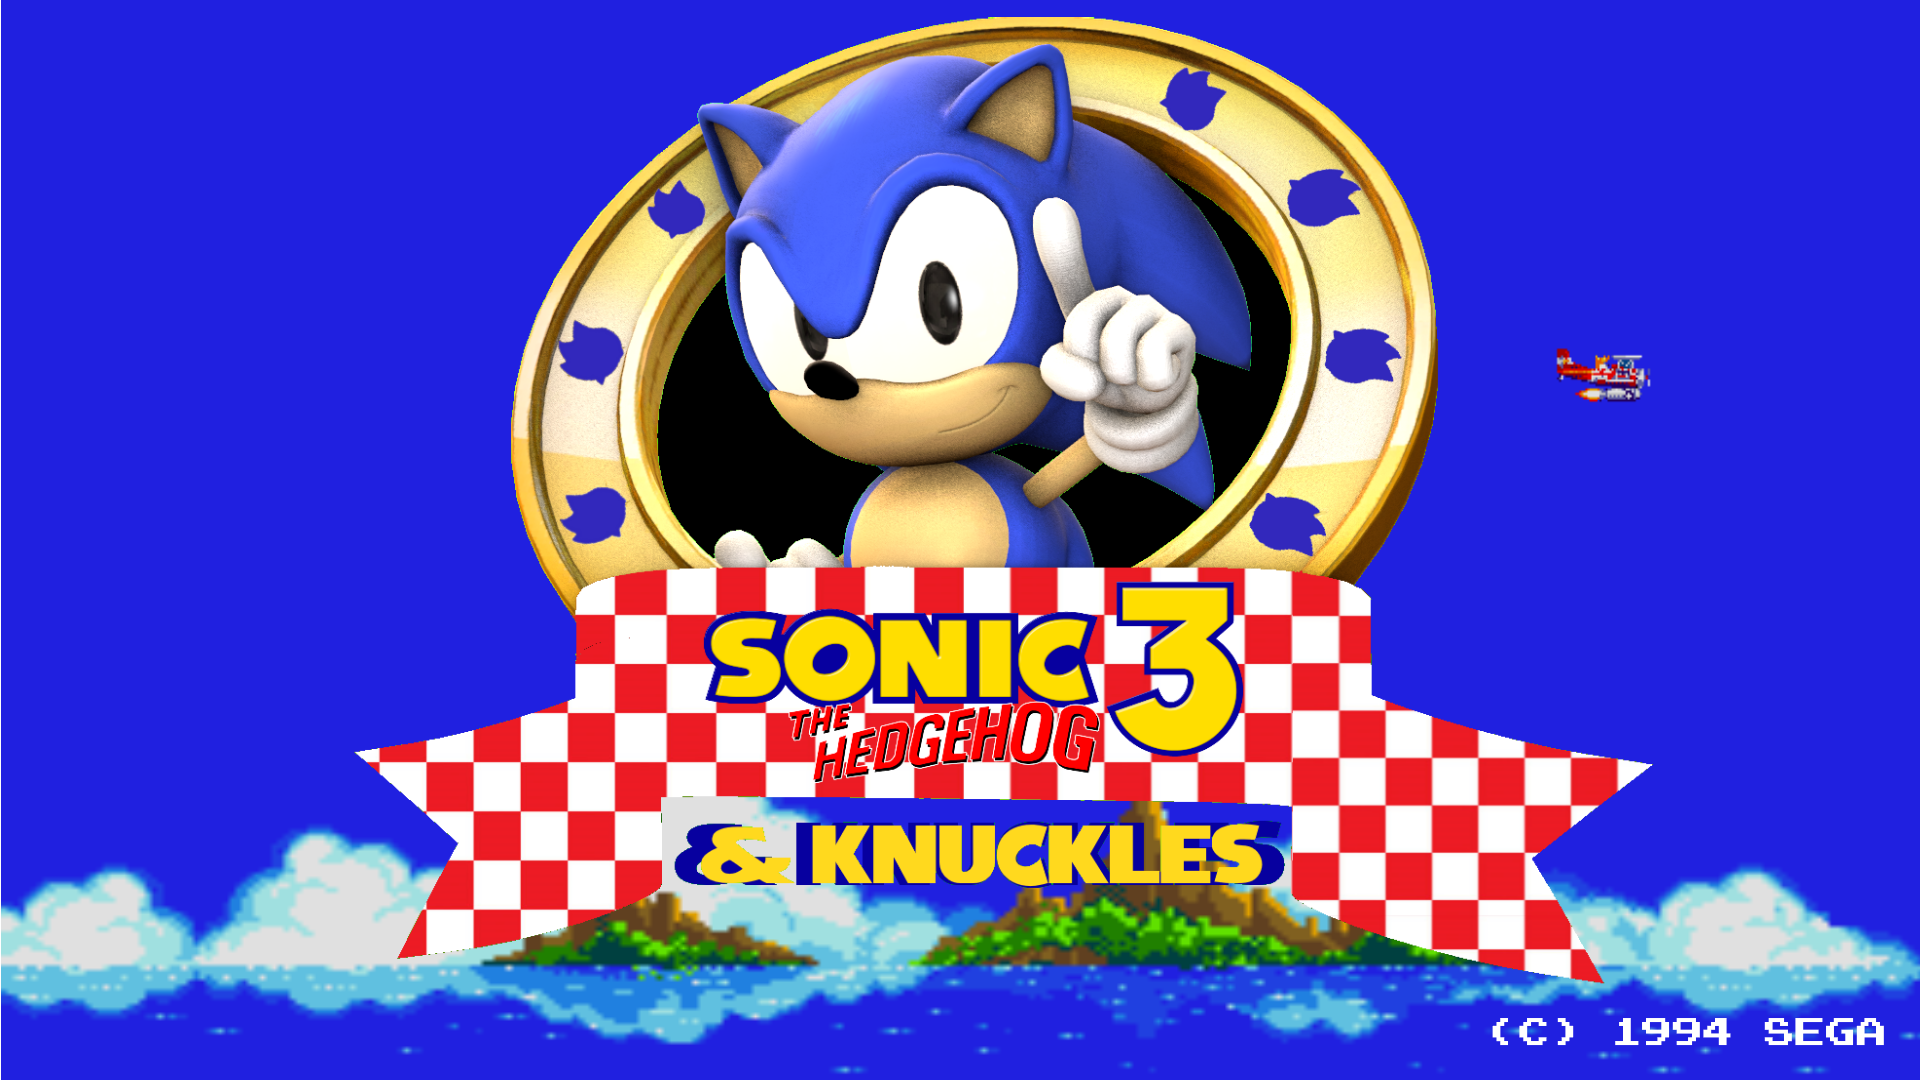 Sonic 3 air knuckles. Sonic 3 и НАКЛЗ. Sonic 3 & Knuckles Sega. Sonic the Hedgehog 3 and Knuckles. Sonic 3 and Knuckles русская версия Ром.